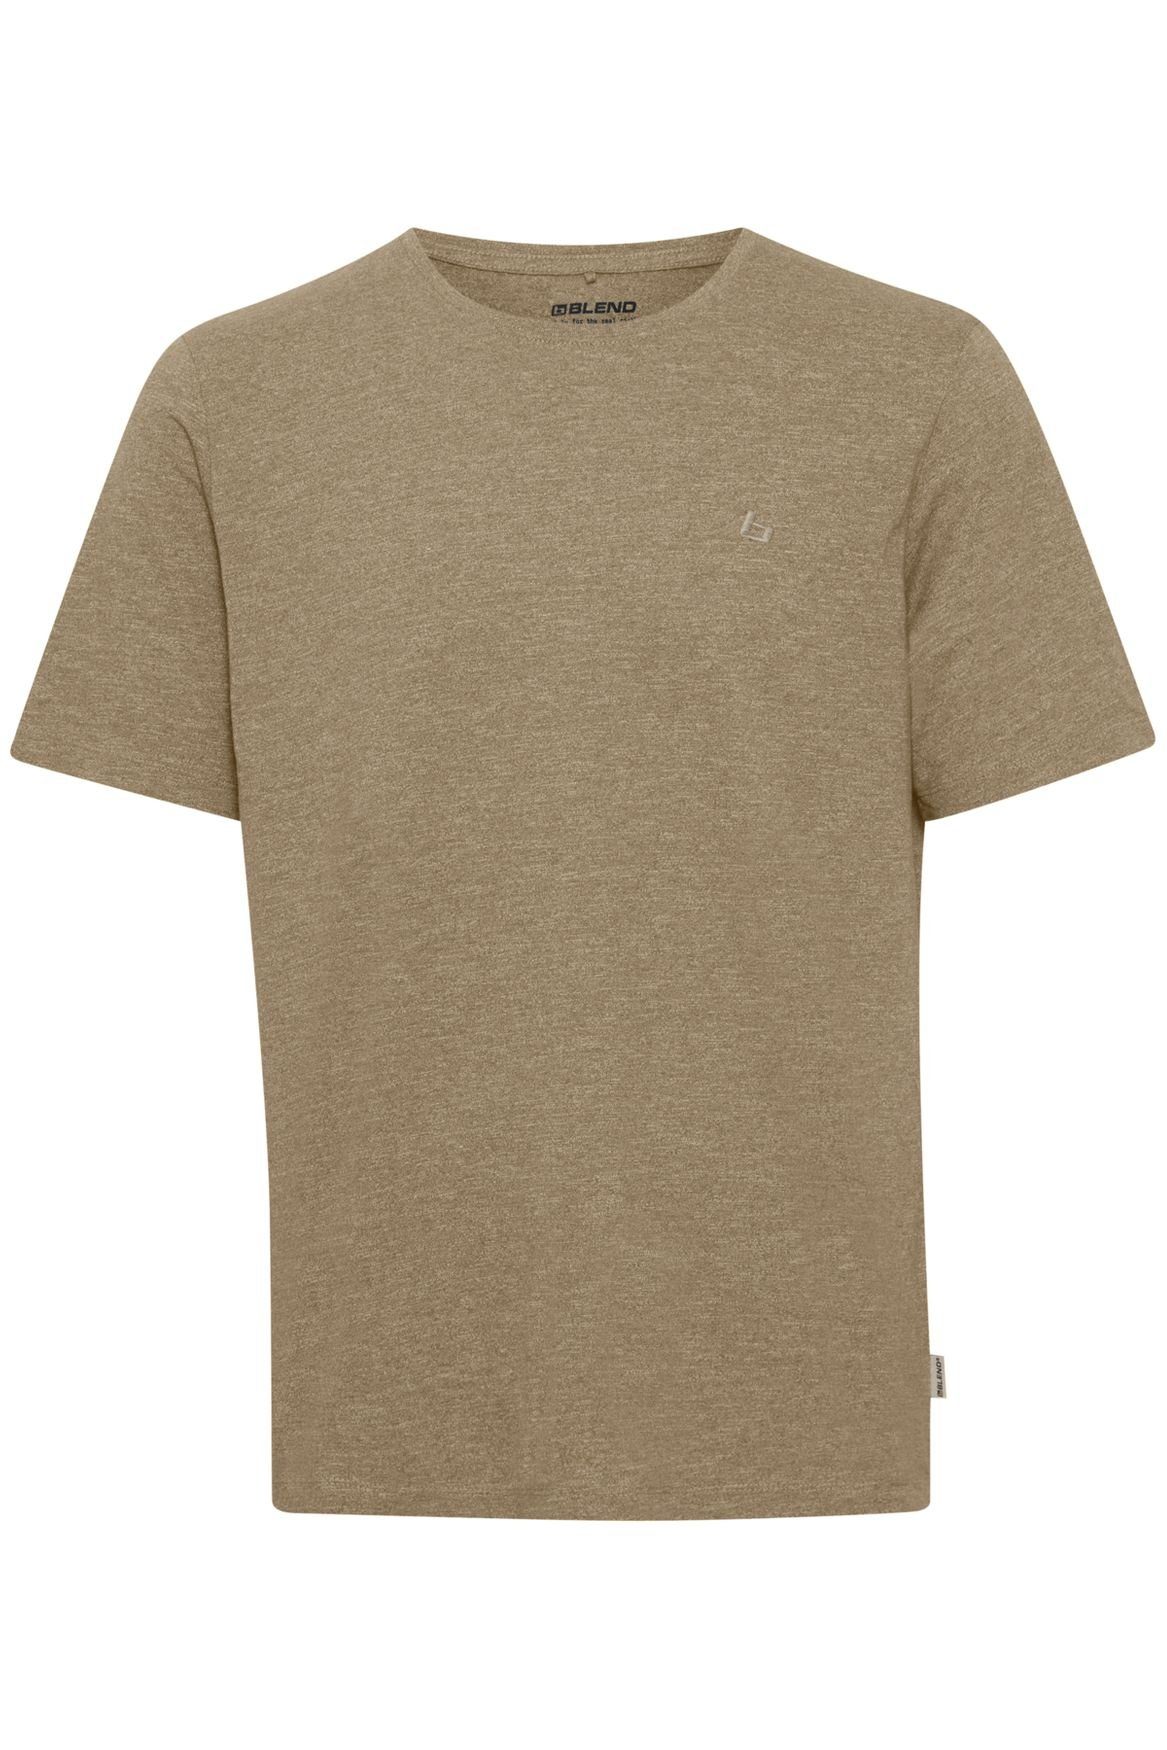 Stretch Blend 5030 T-Shirt BHWilton Rundhals in Beige T-Shirt Kurzarm Shirt